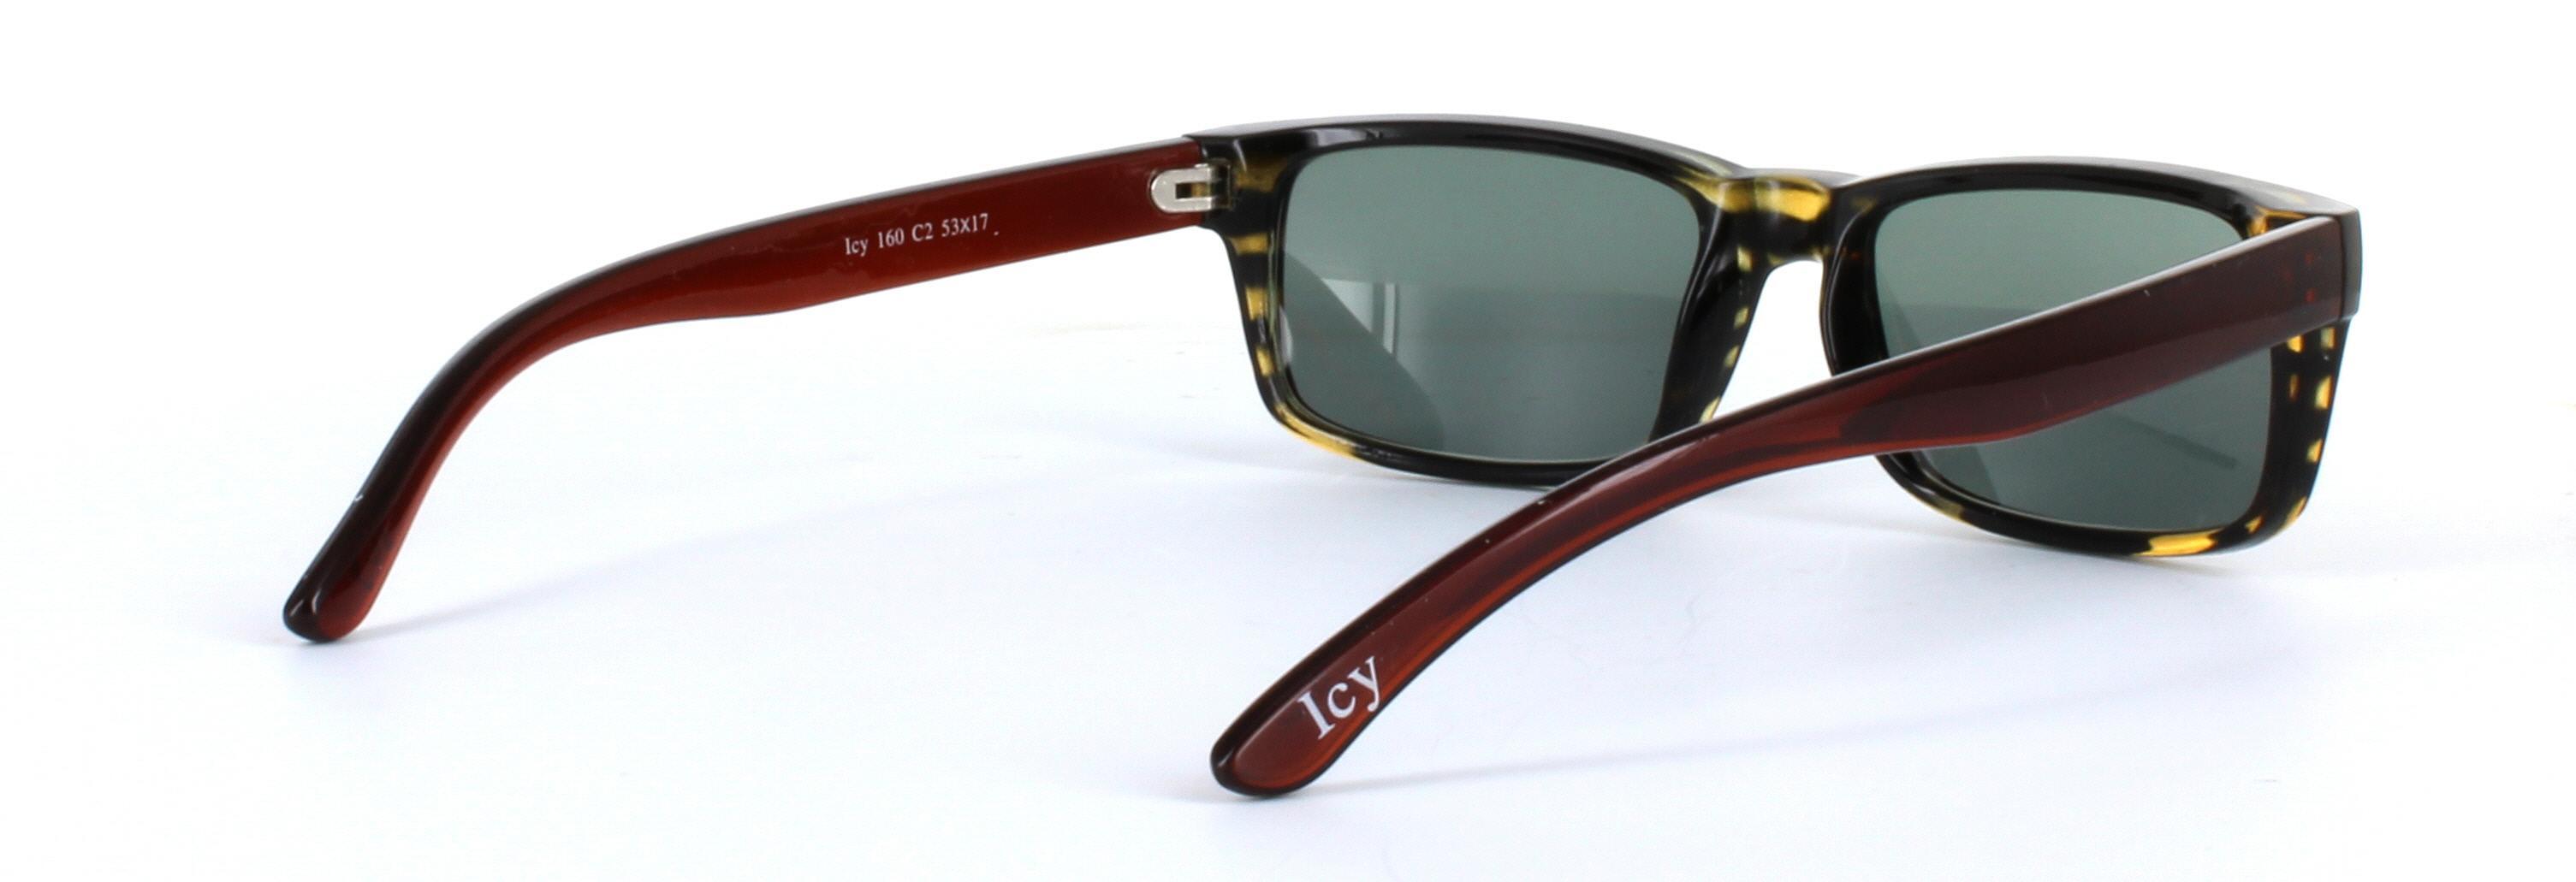 ICY 160 Brown Full Rim Rectangular Plastic Prescription Sunglasses - Image View 4